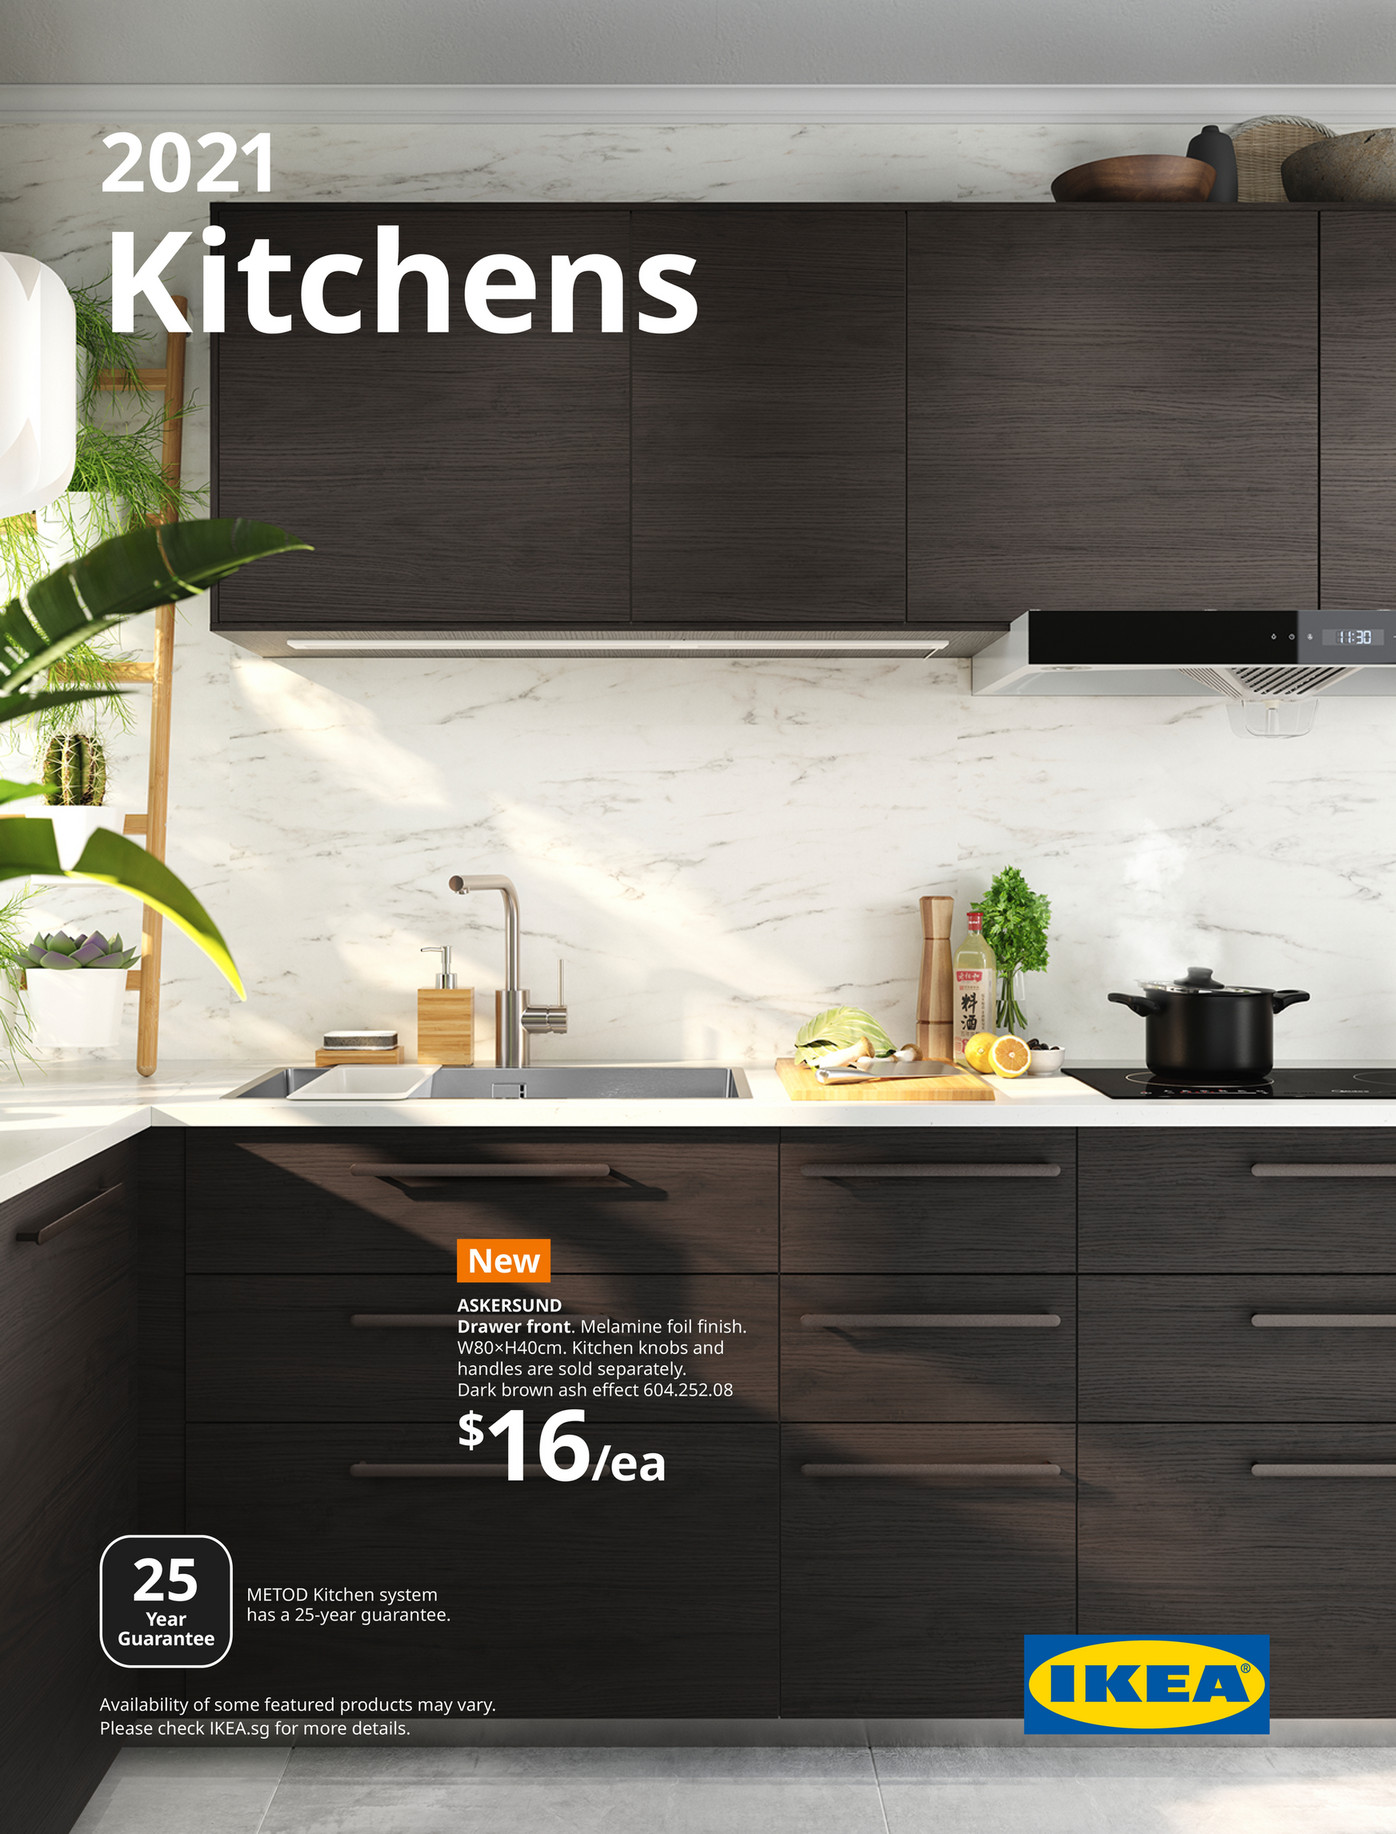 IKEA Kitchens 2021 - Page 1